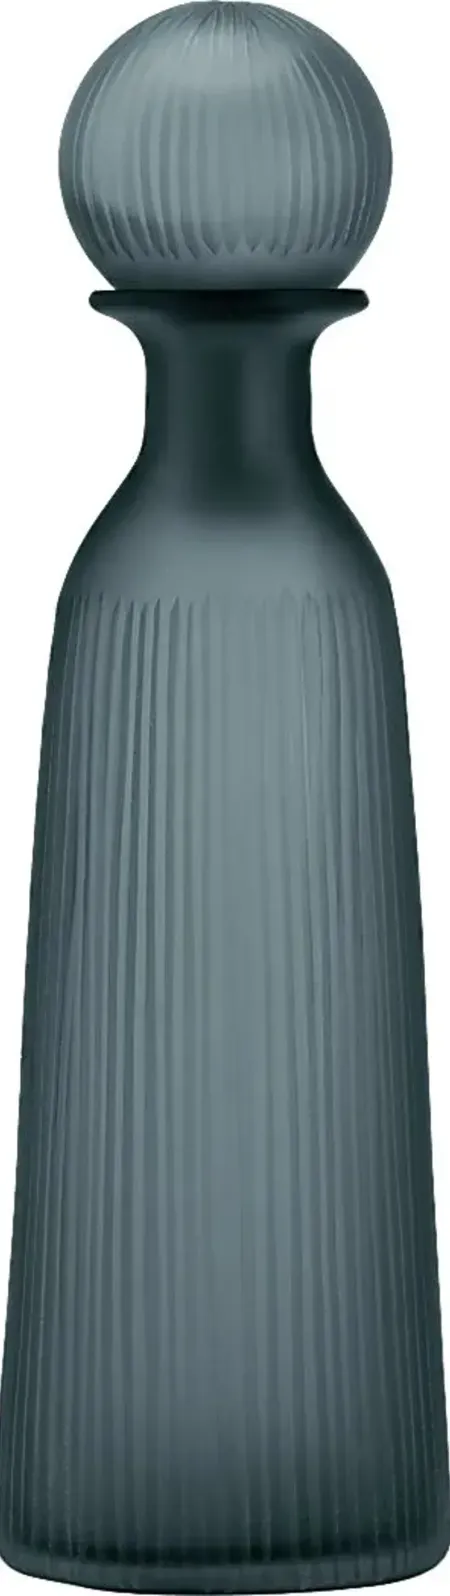 Revercombs Gray 17 in. Vase